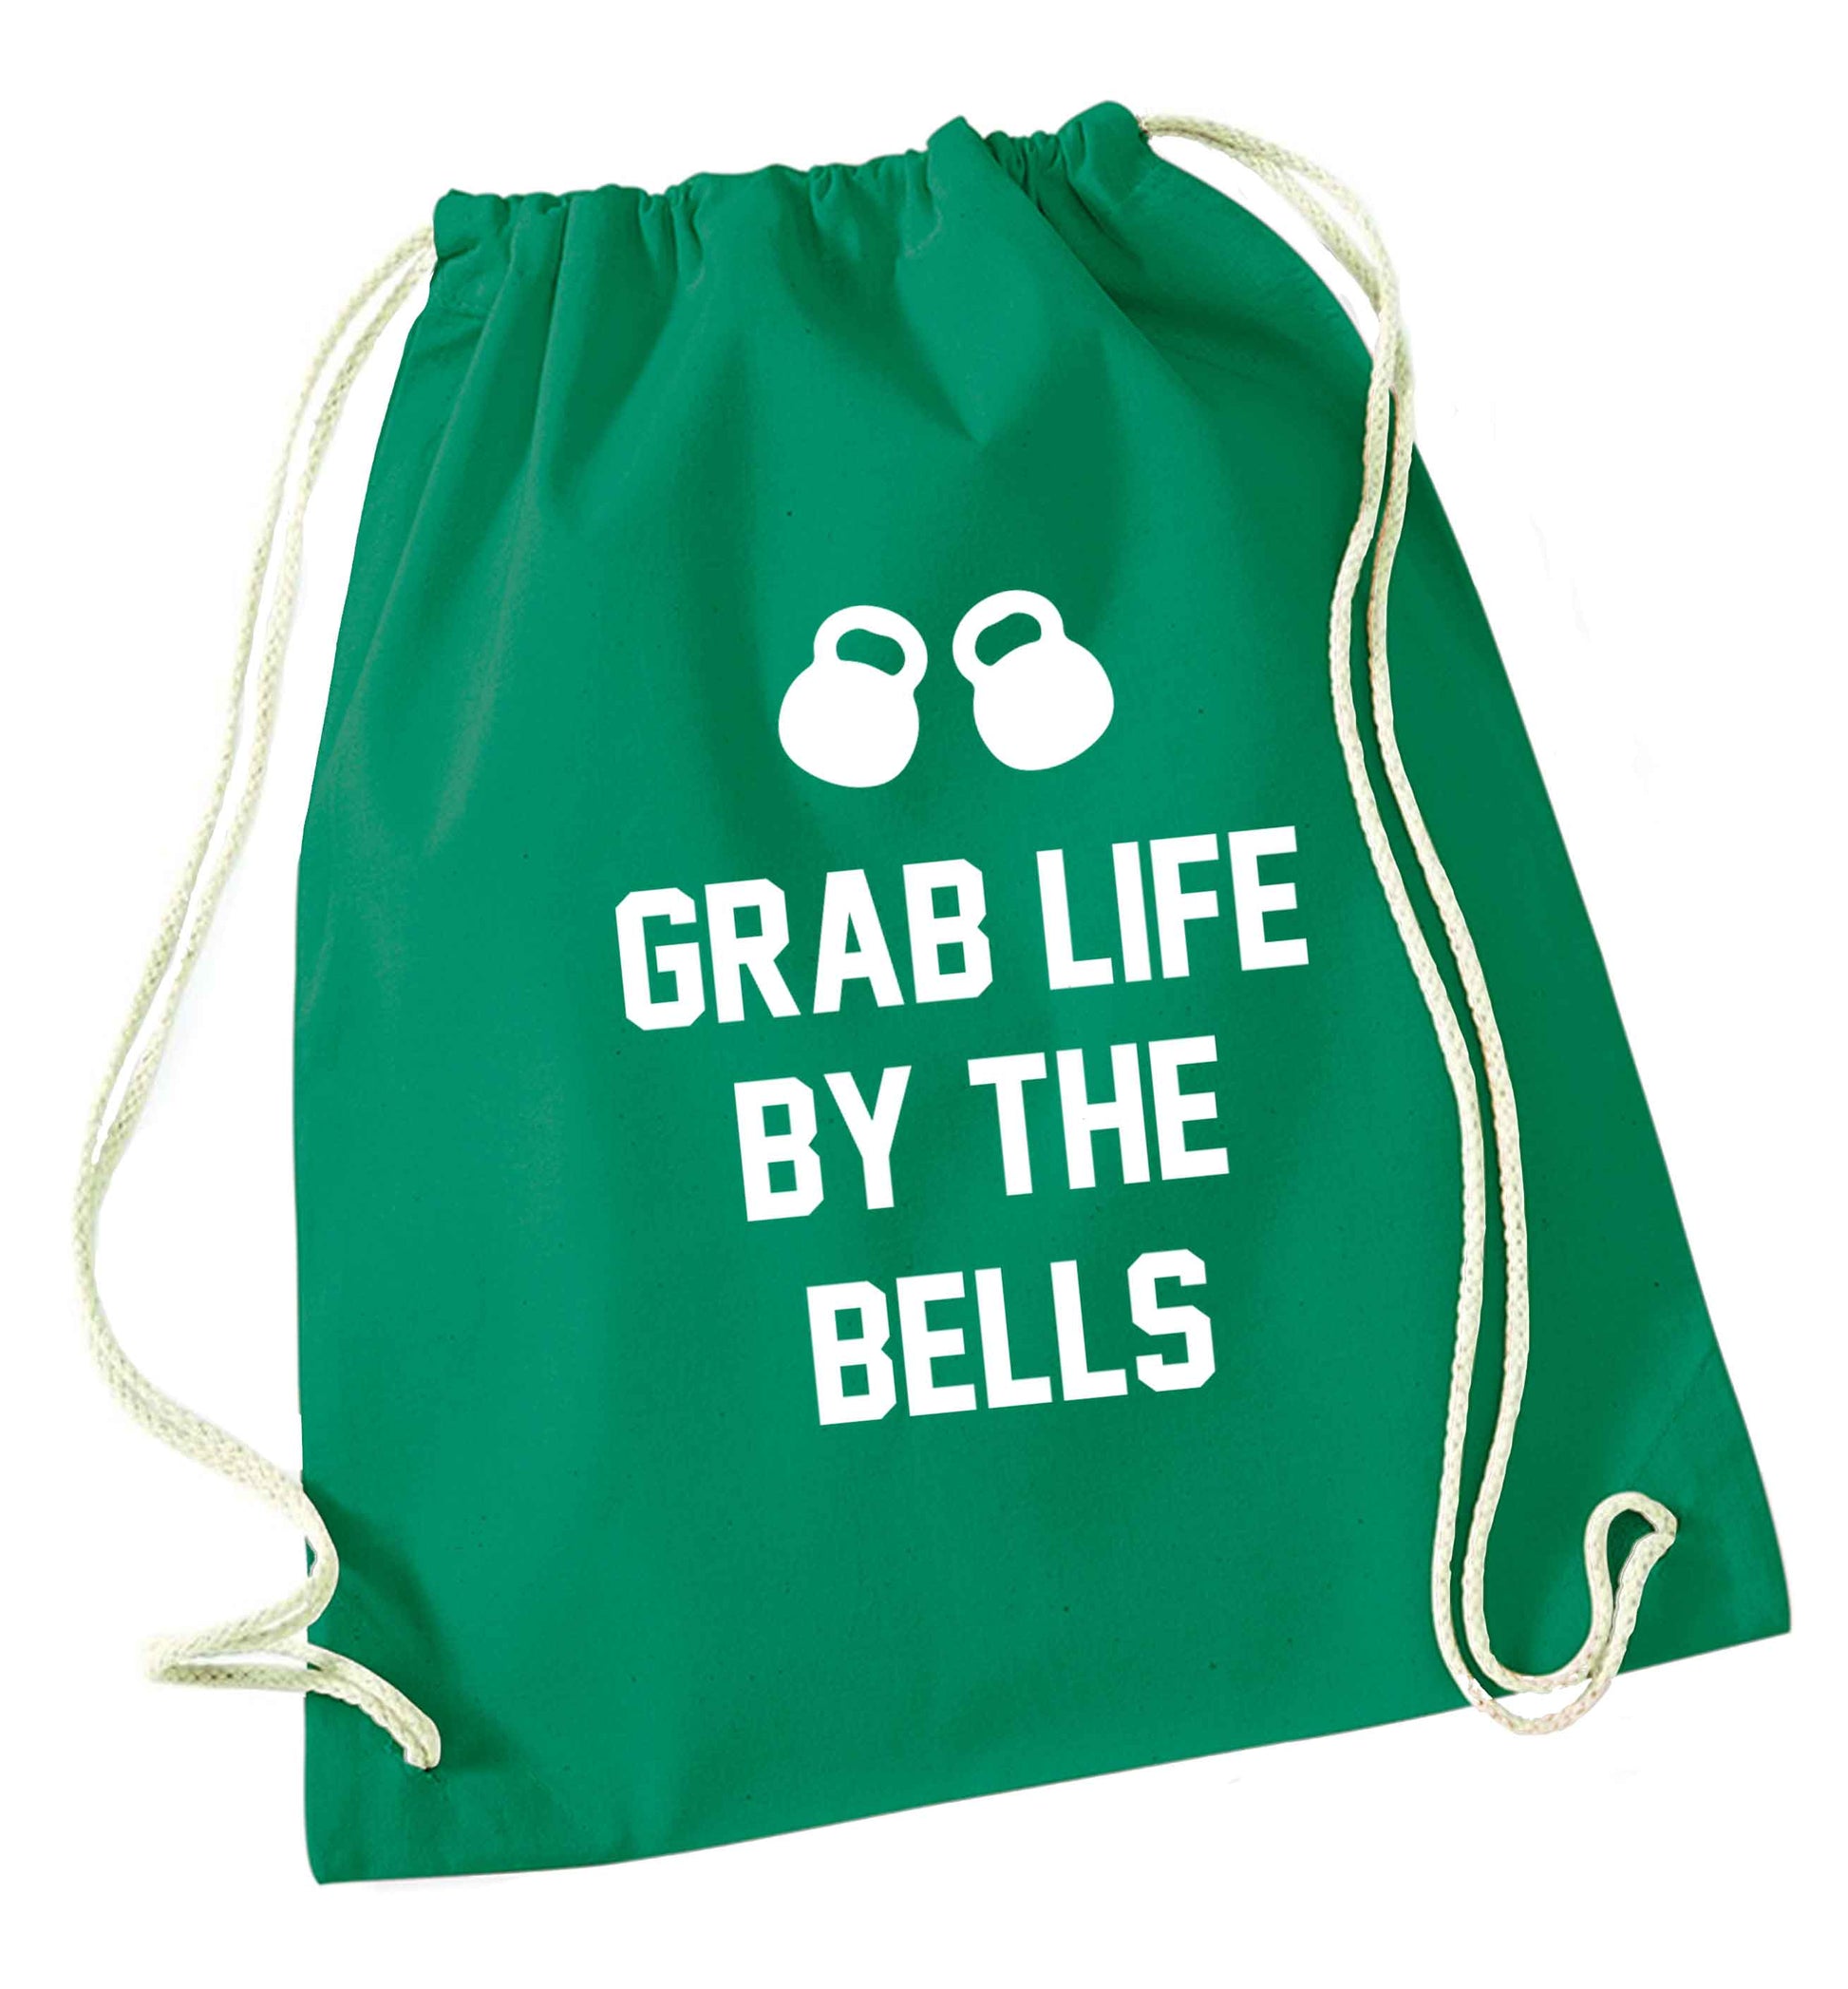 Grab life by the bells green drawstring bag